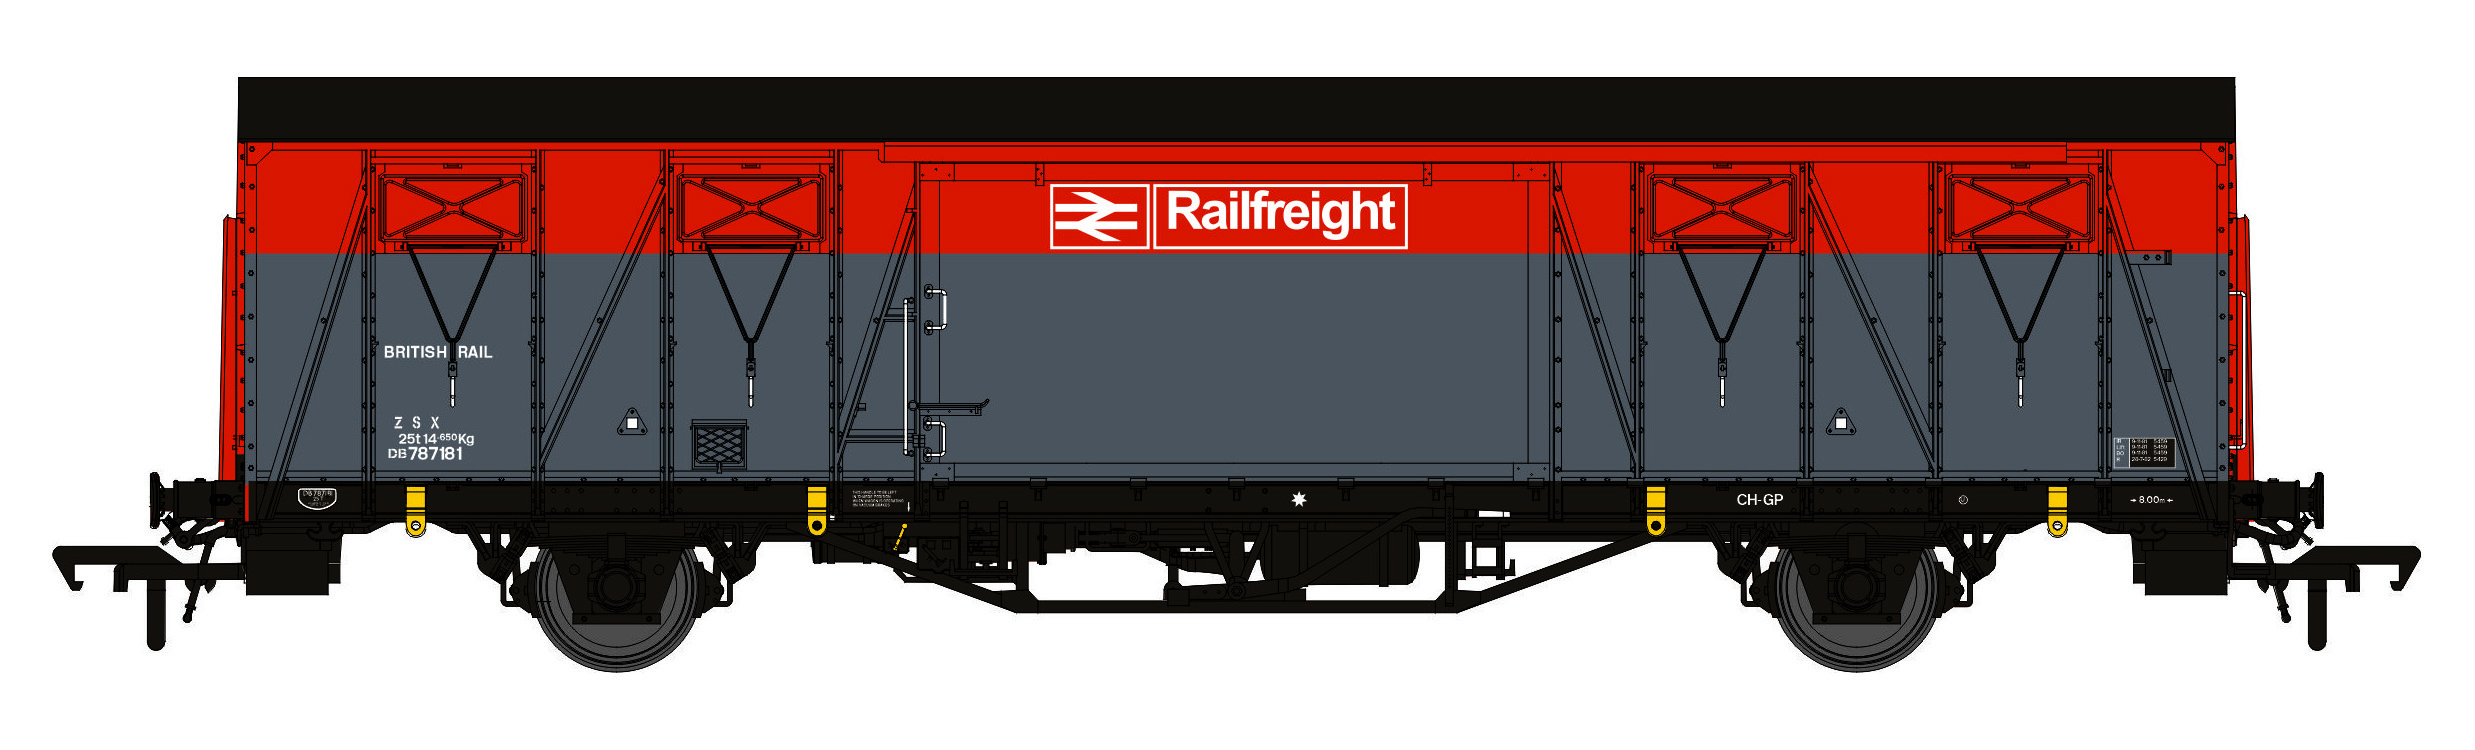 Rapido Trains 910006 ZXS Ferry Van No. DB787181 Railfreight Red/Grey